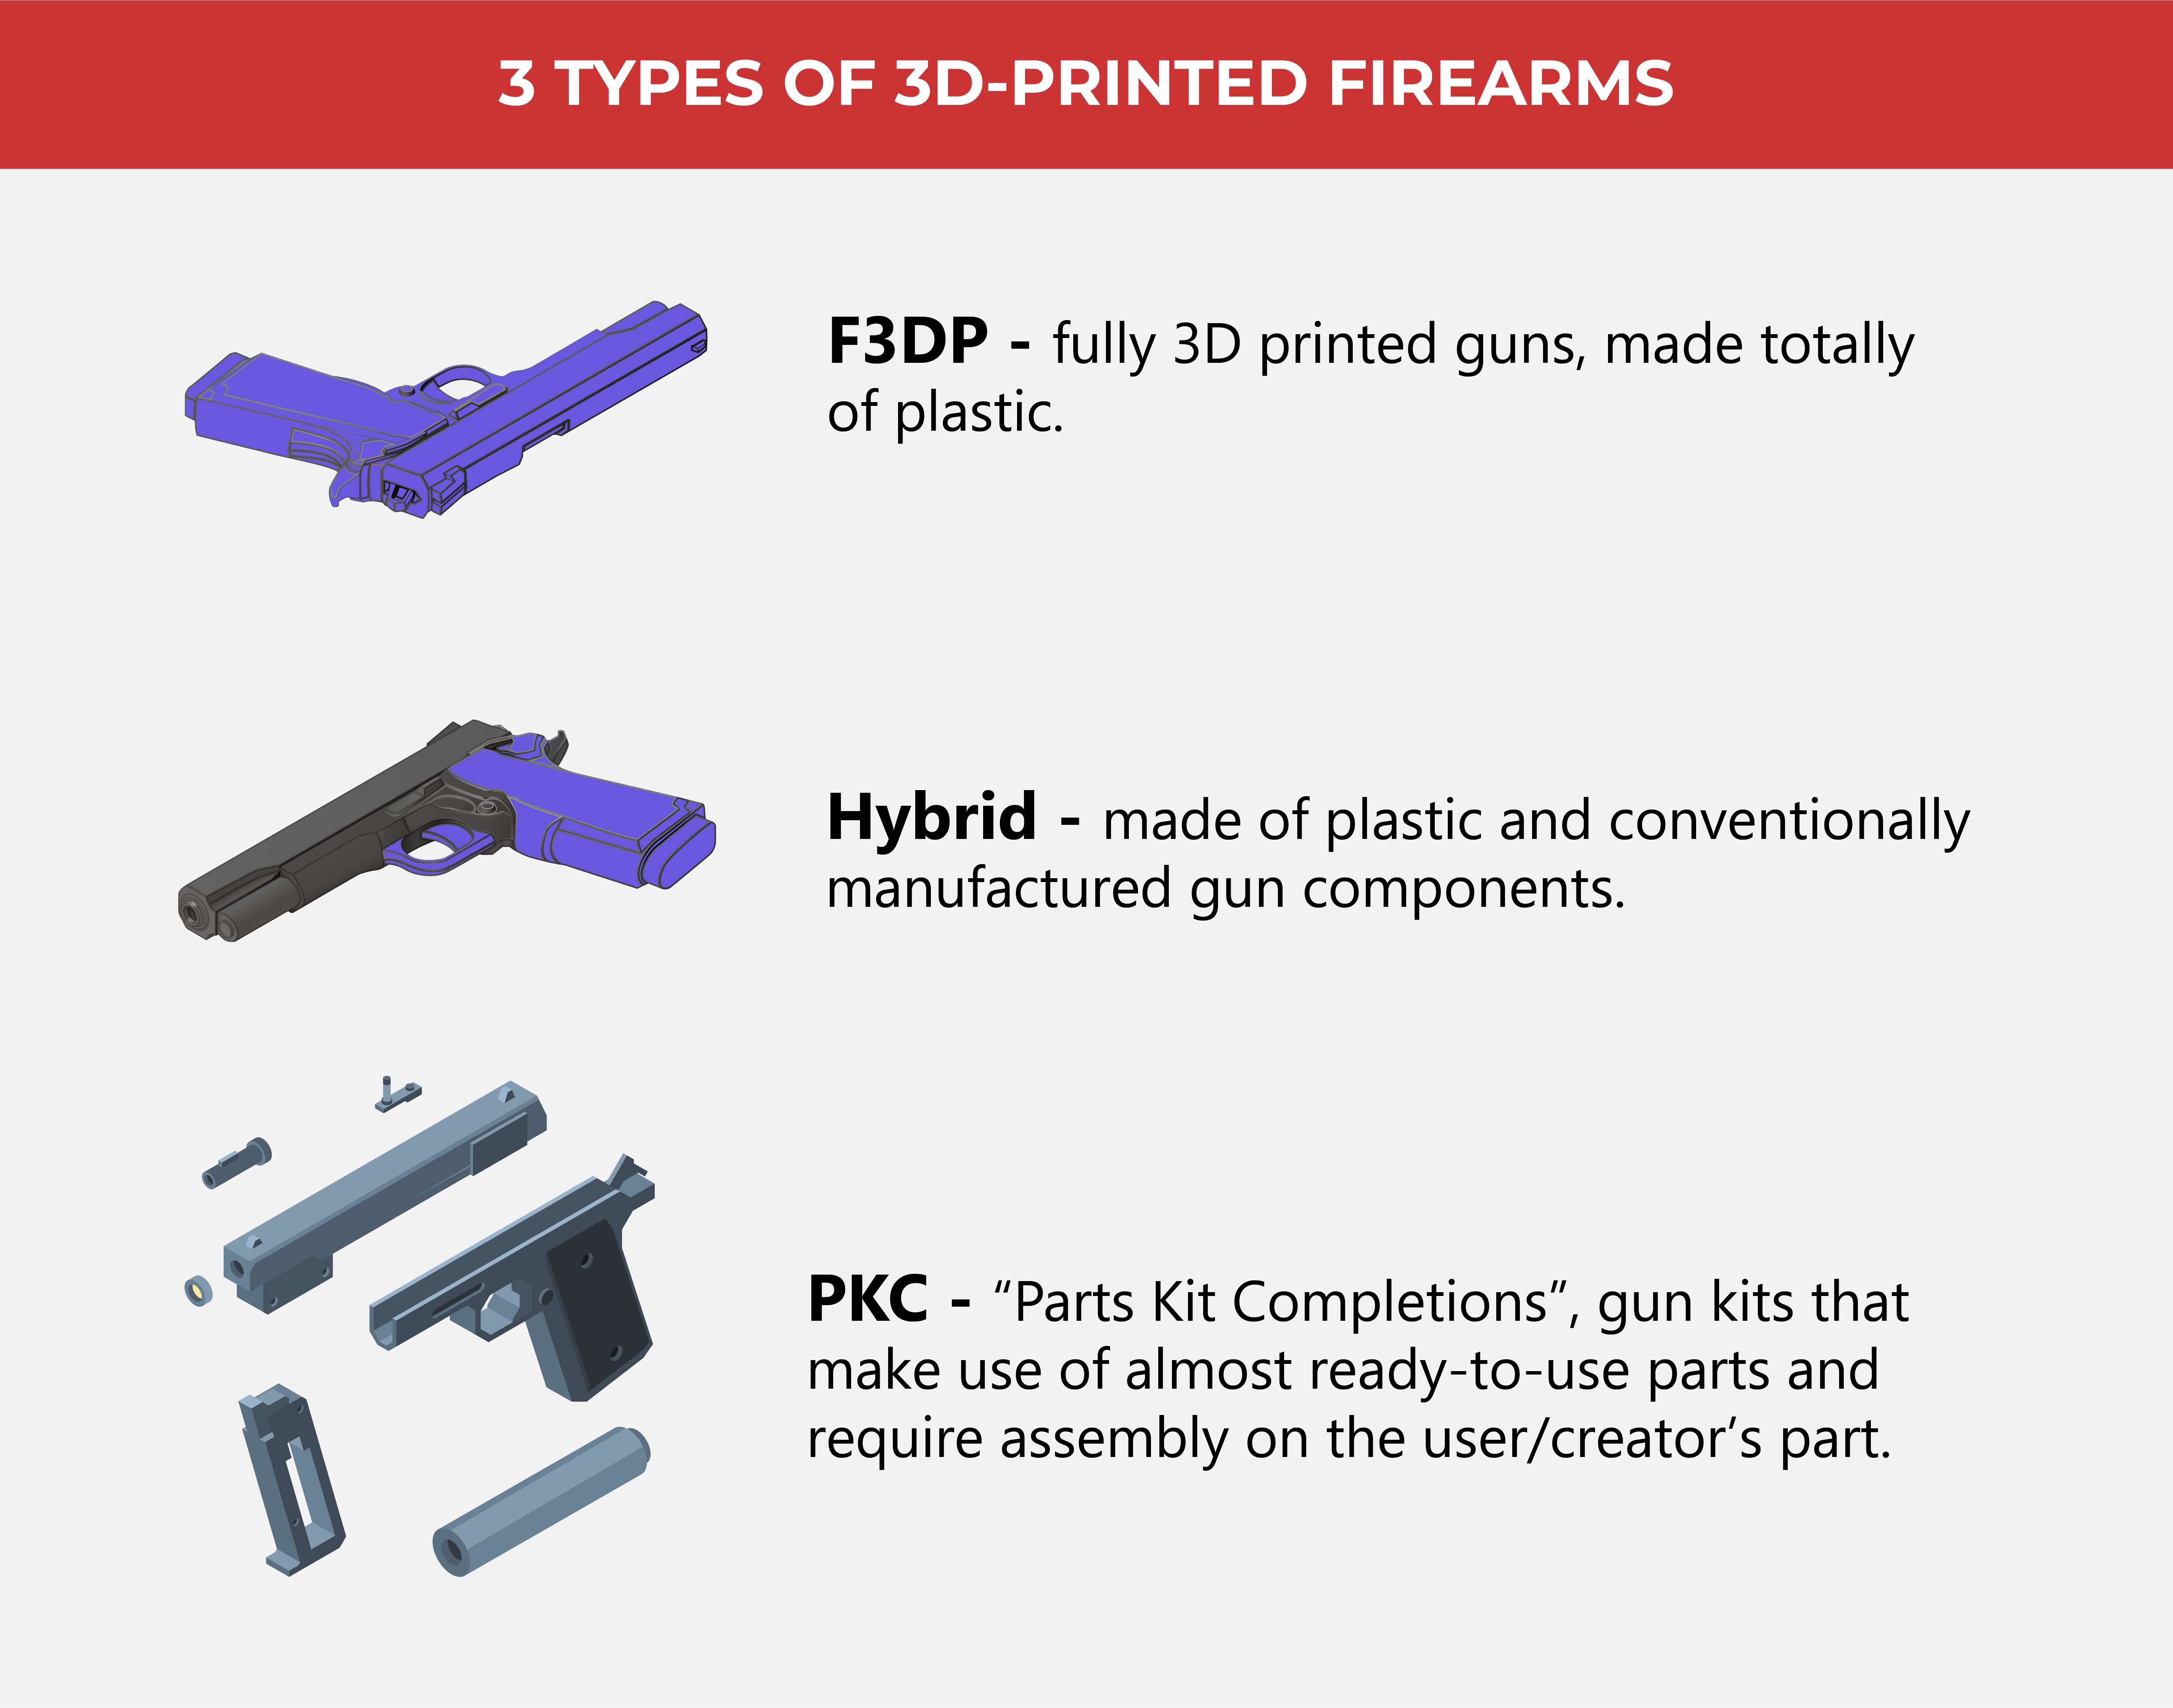 DIY Guns: A Clear and Printed Danger